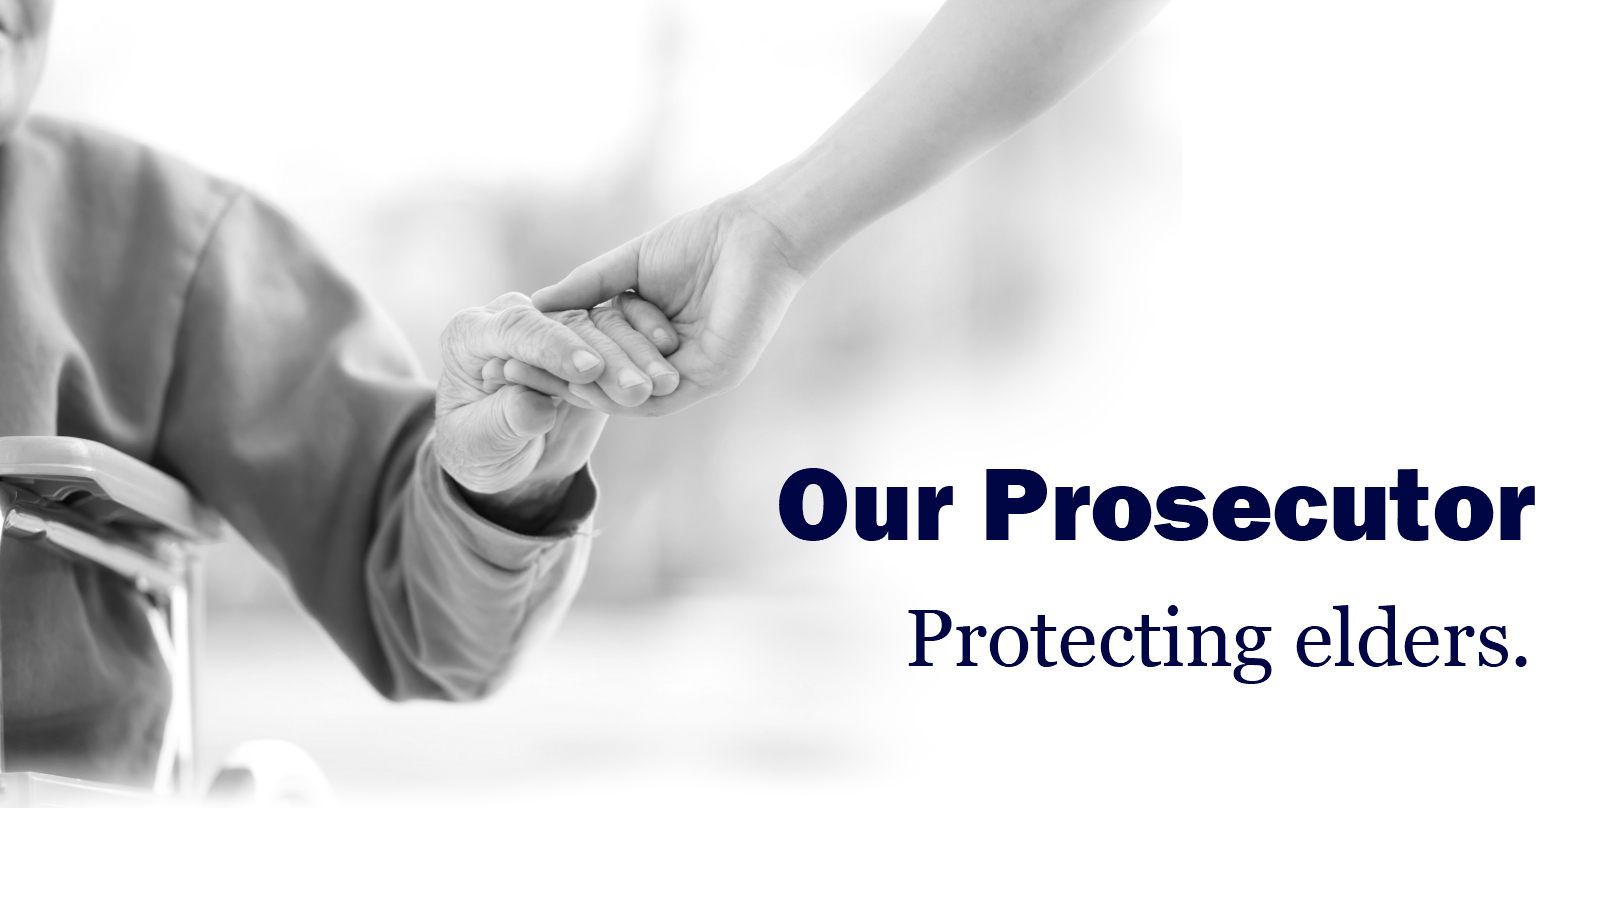 Our Prosecutor Protecting Elders